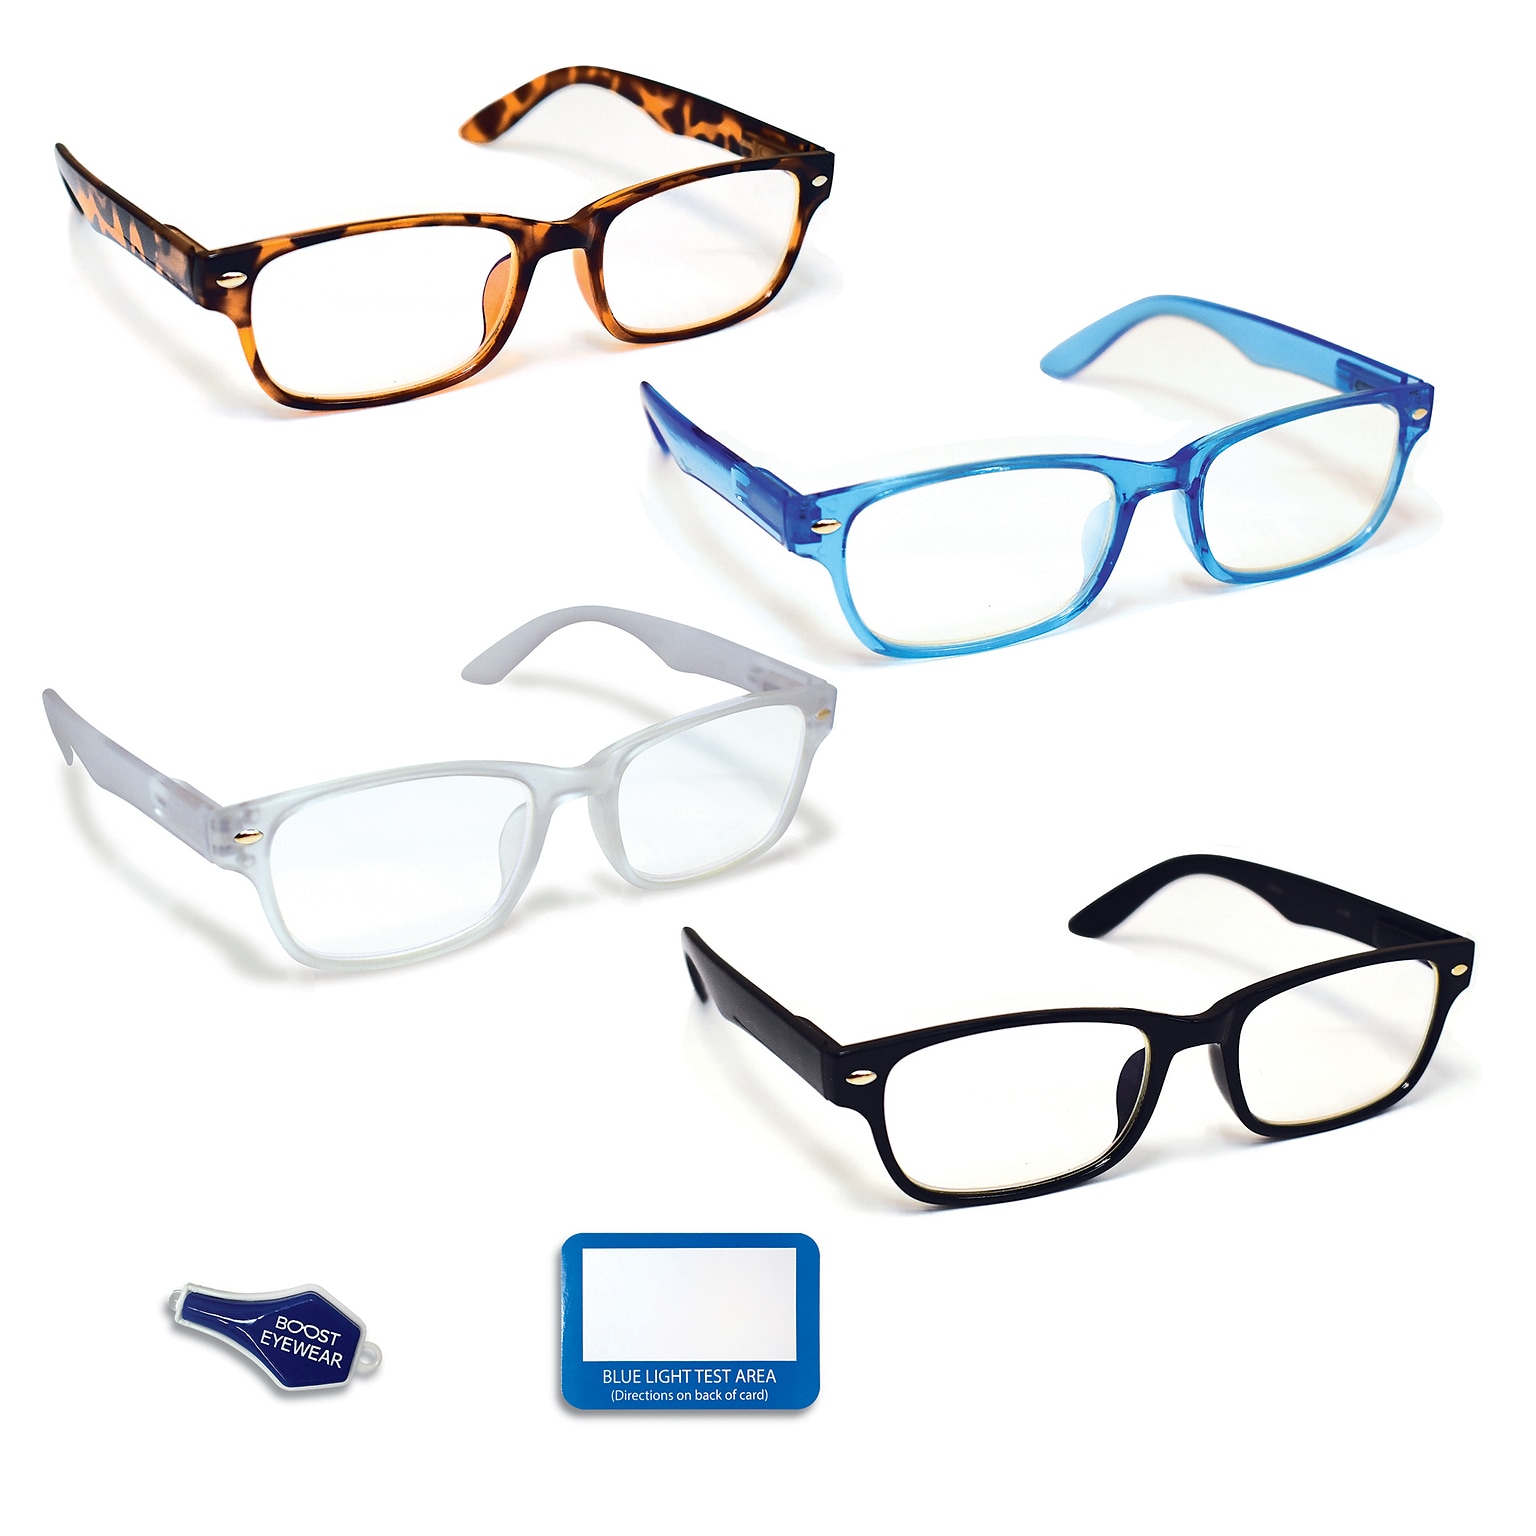 Boost Eyewear Reading Glasses Blue Light Blockers +1.75 Rectangular Frames Assorted Colors (20175-4PK)